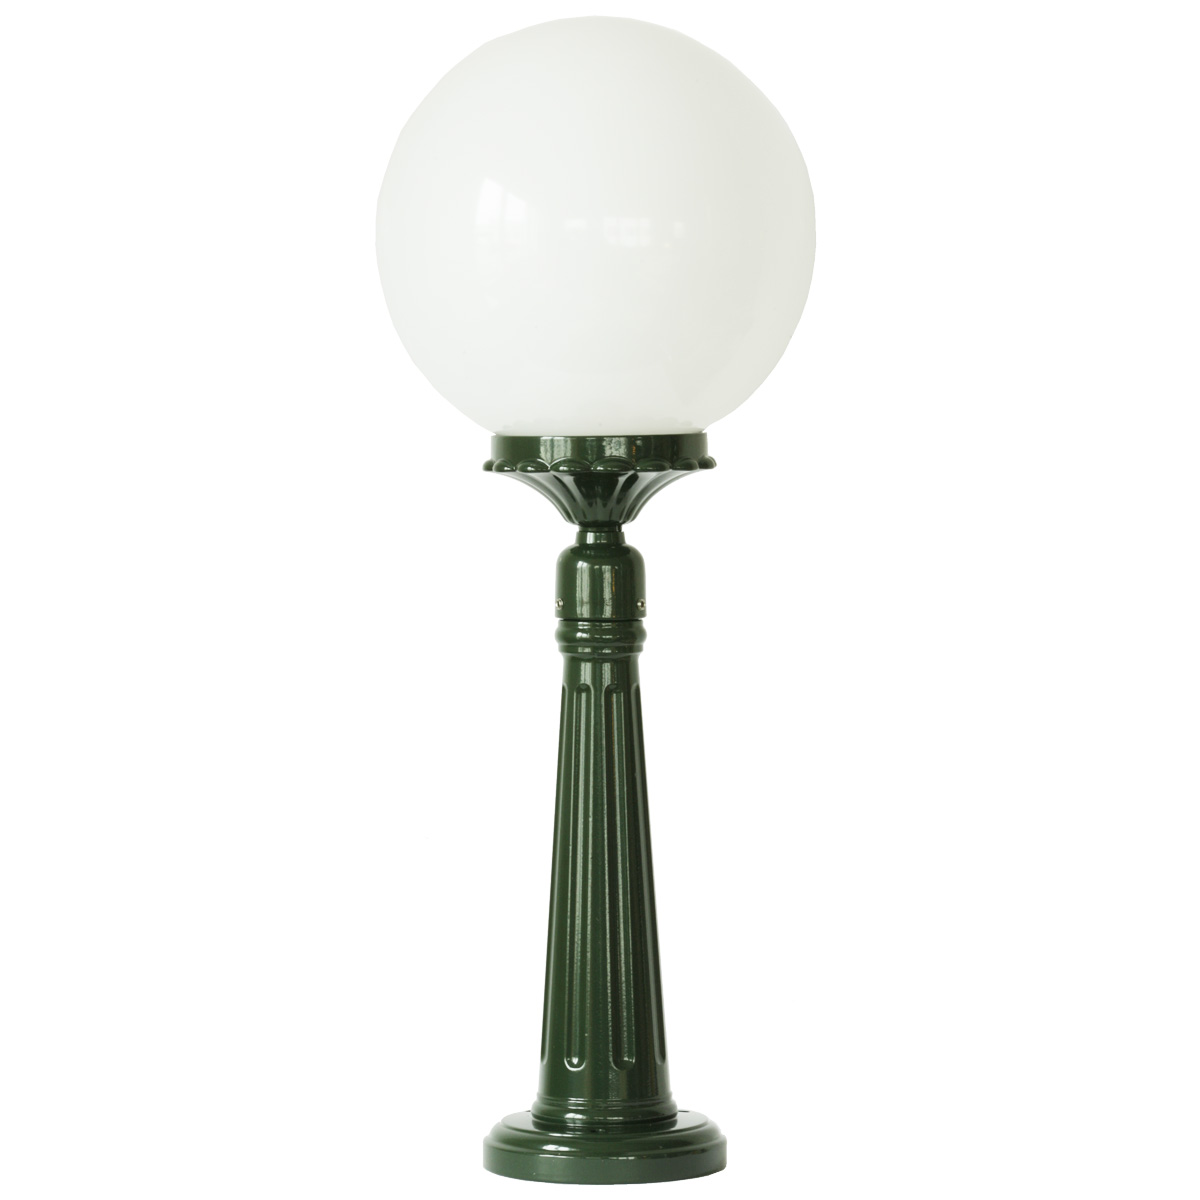 Pedestal Light with Globe